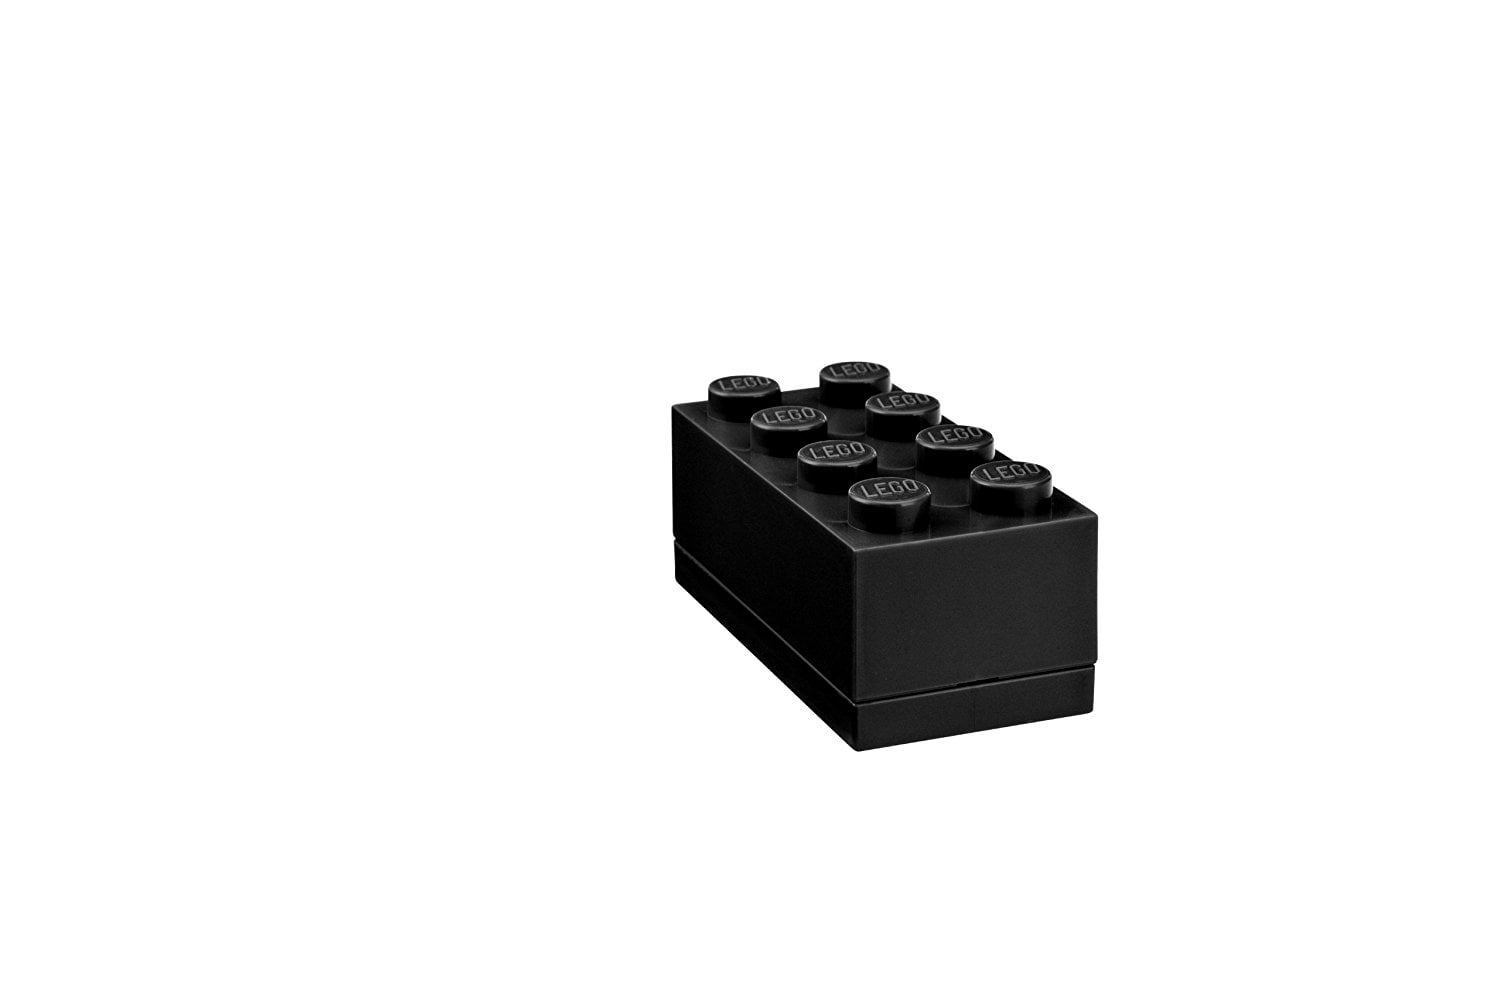 lego classic mini box